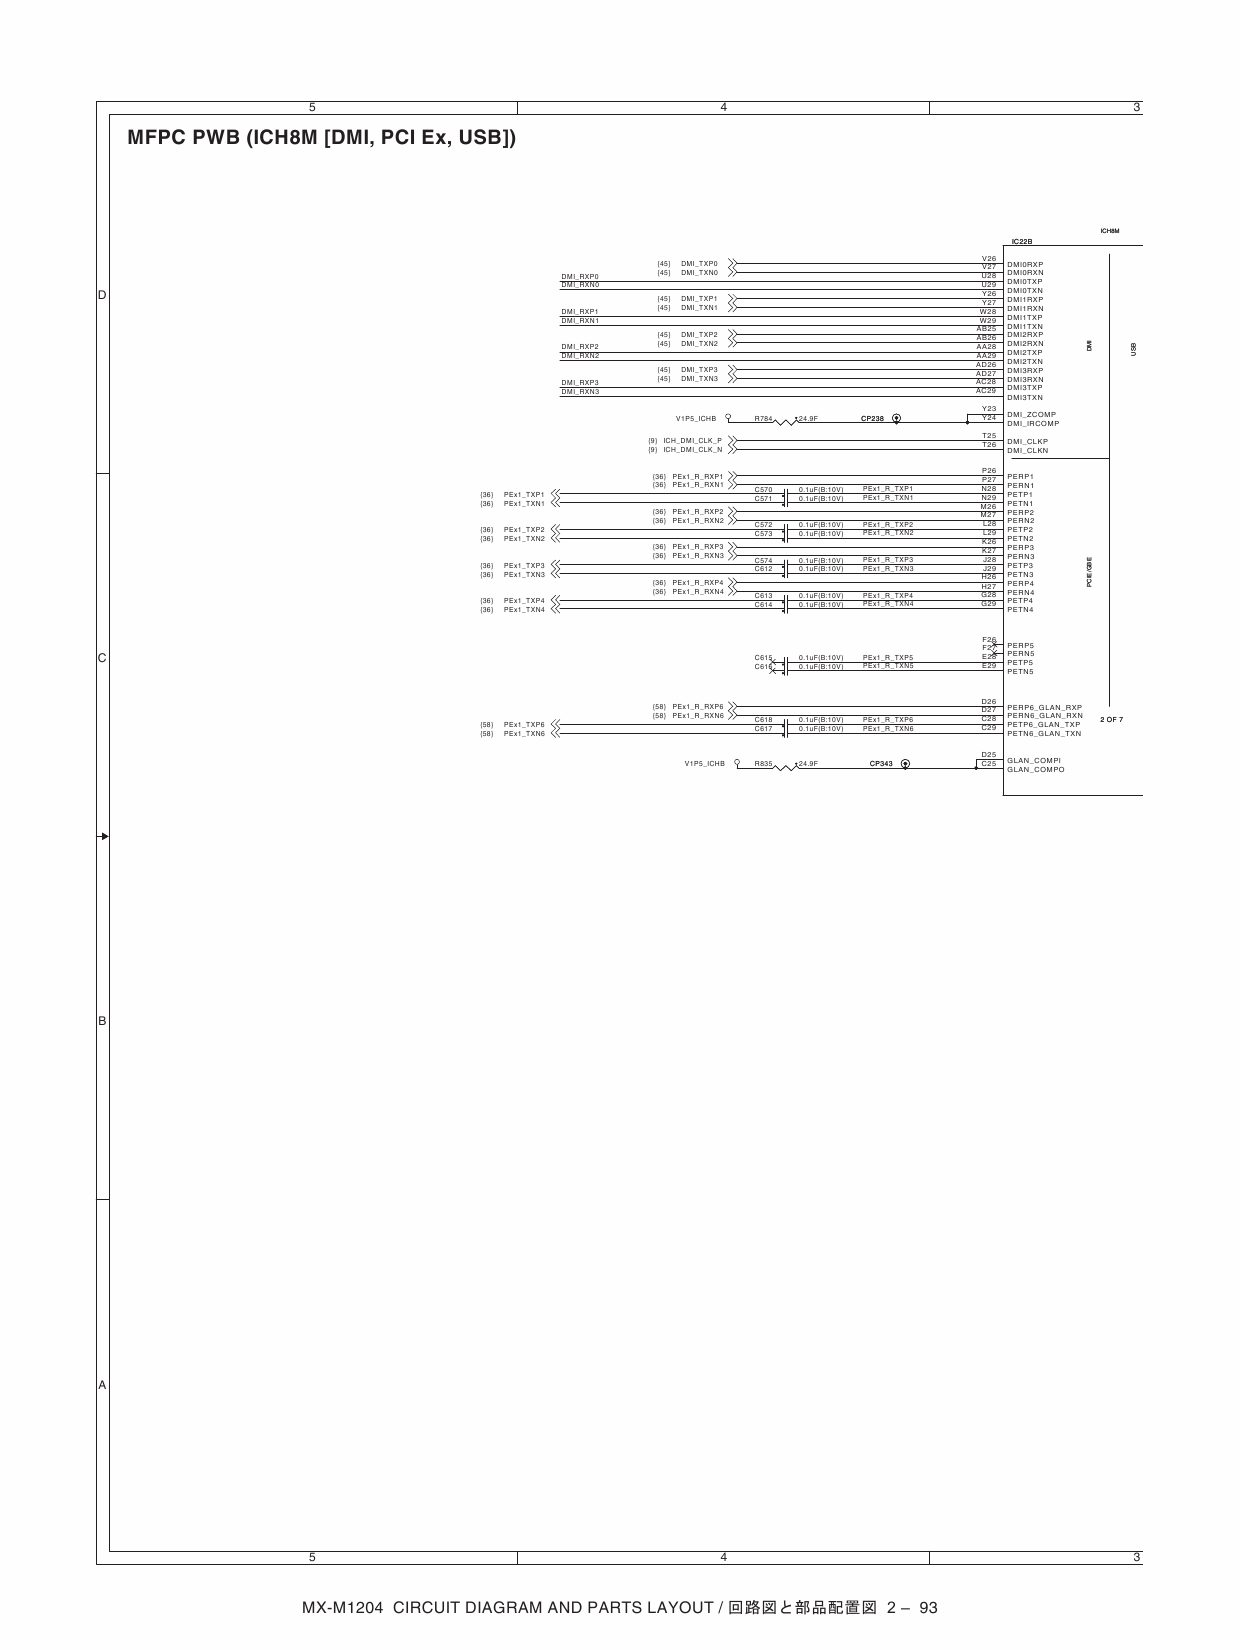 SHARP MX M904 M1054 M1204 Circuit Diagrams-3